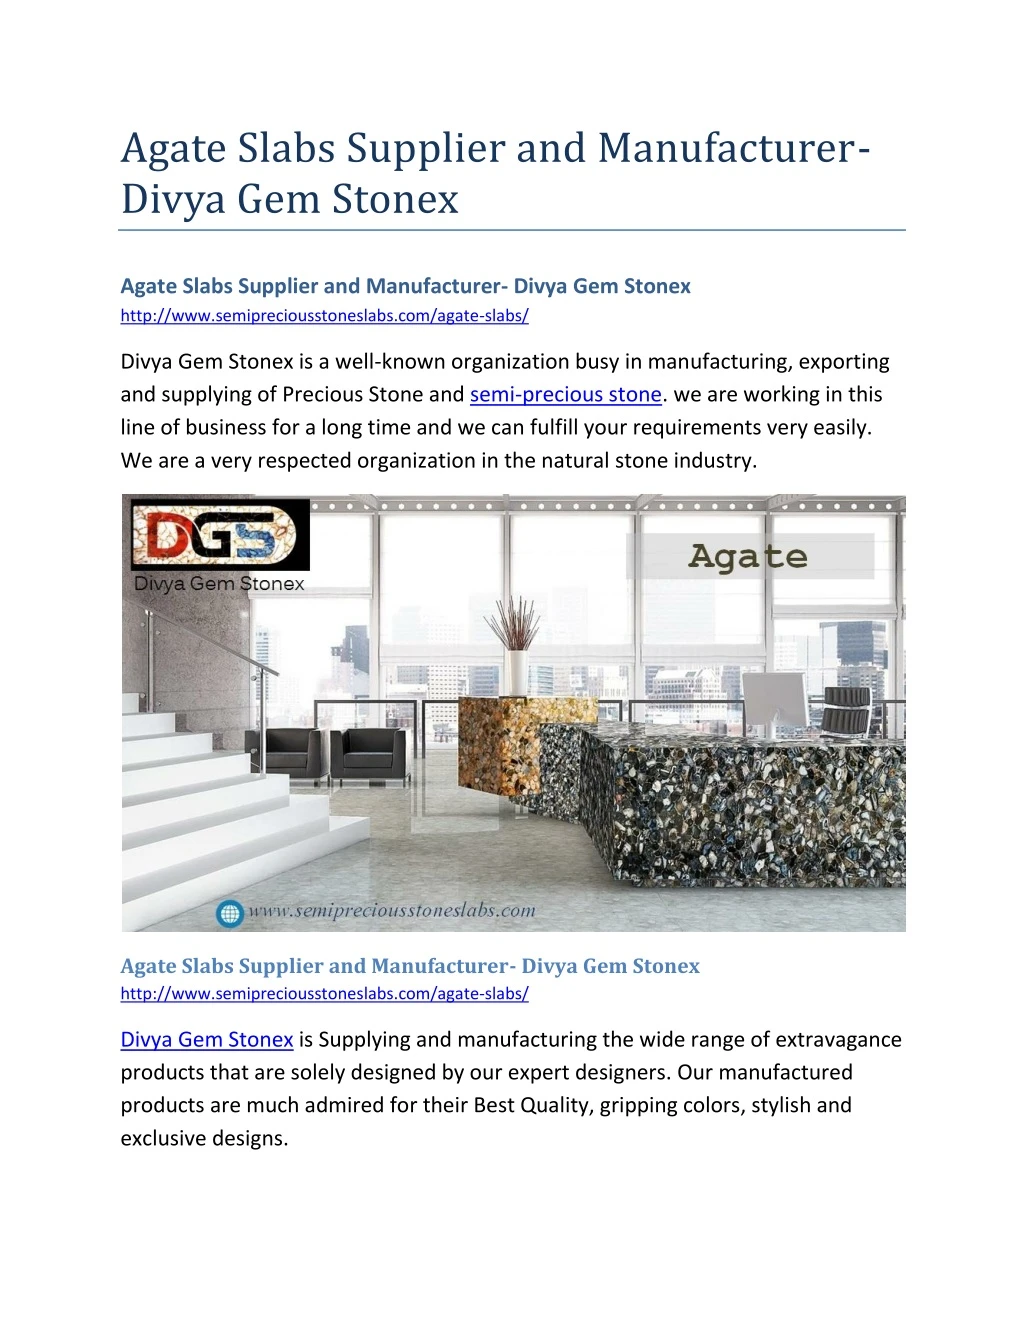 agate slabs supplier and manufacturer divya